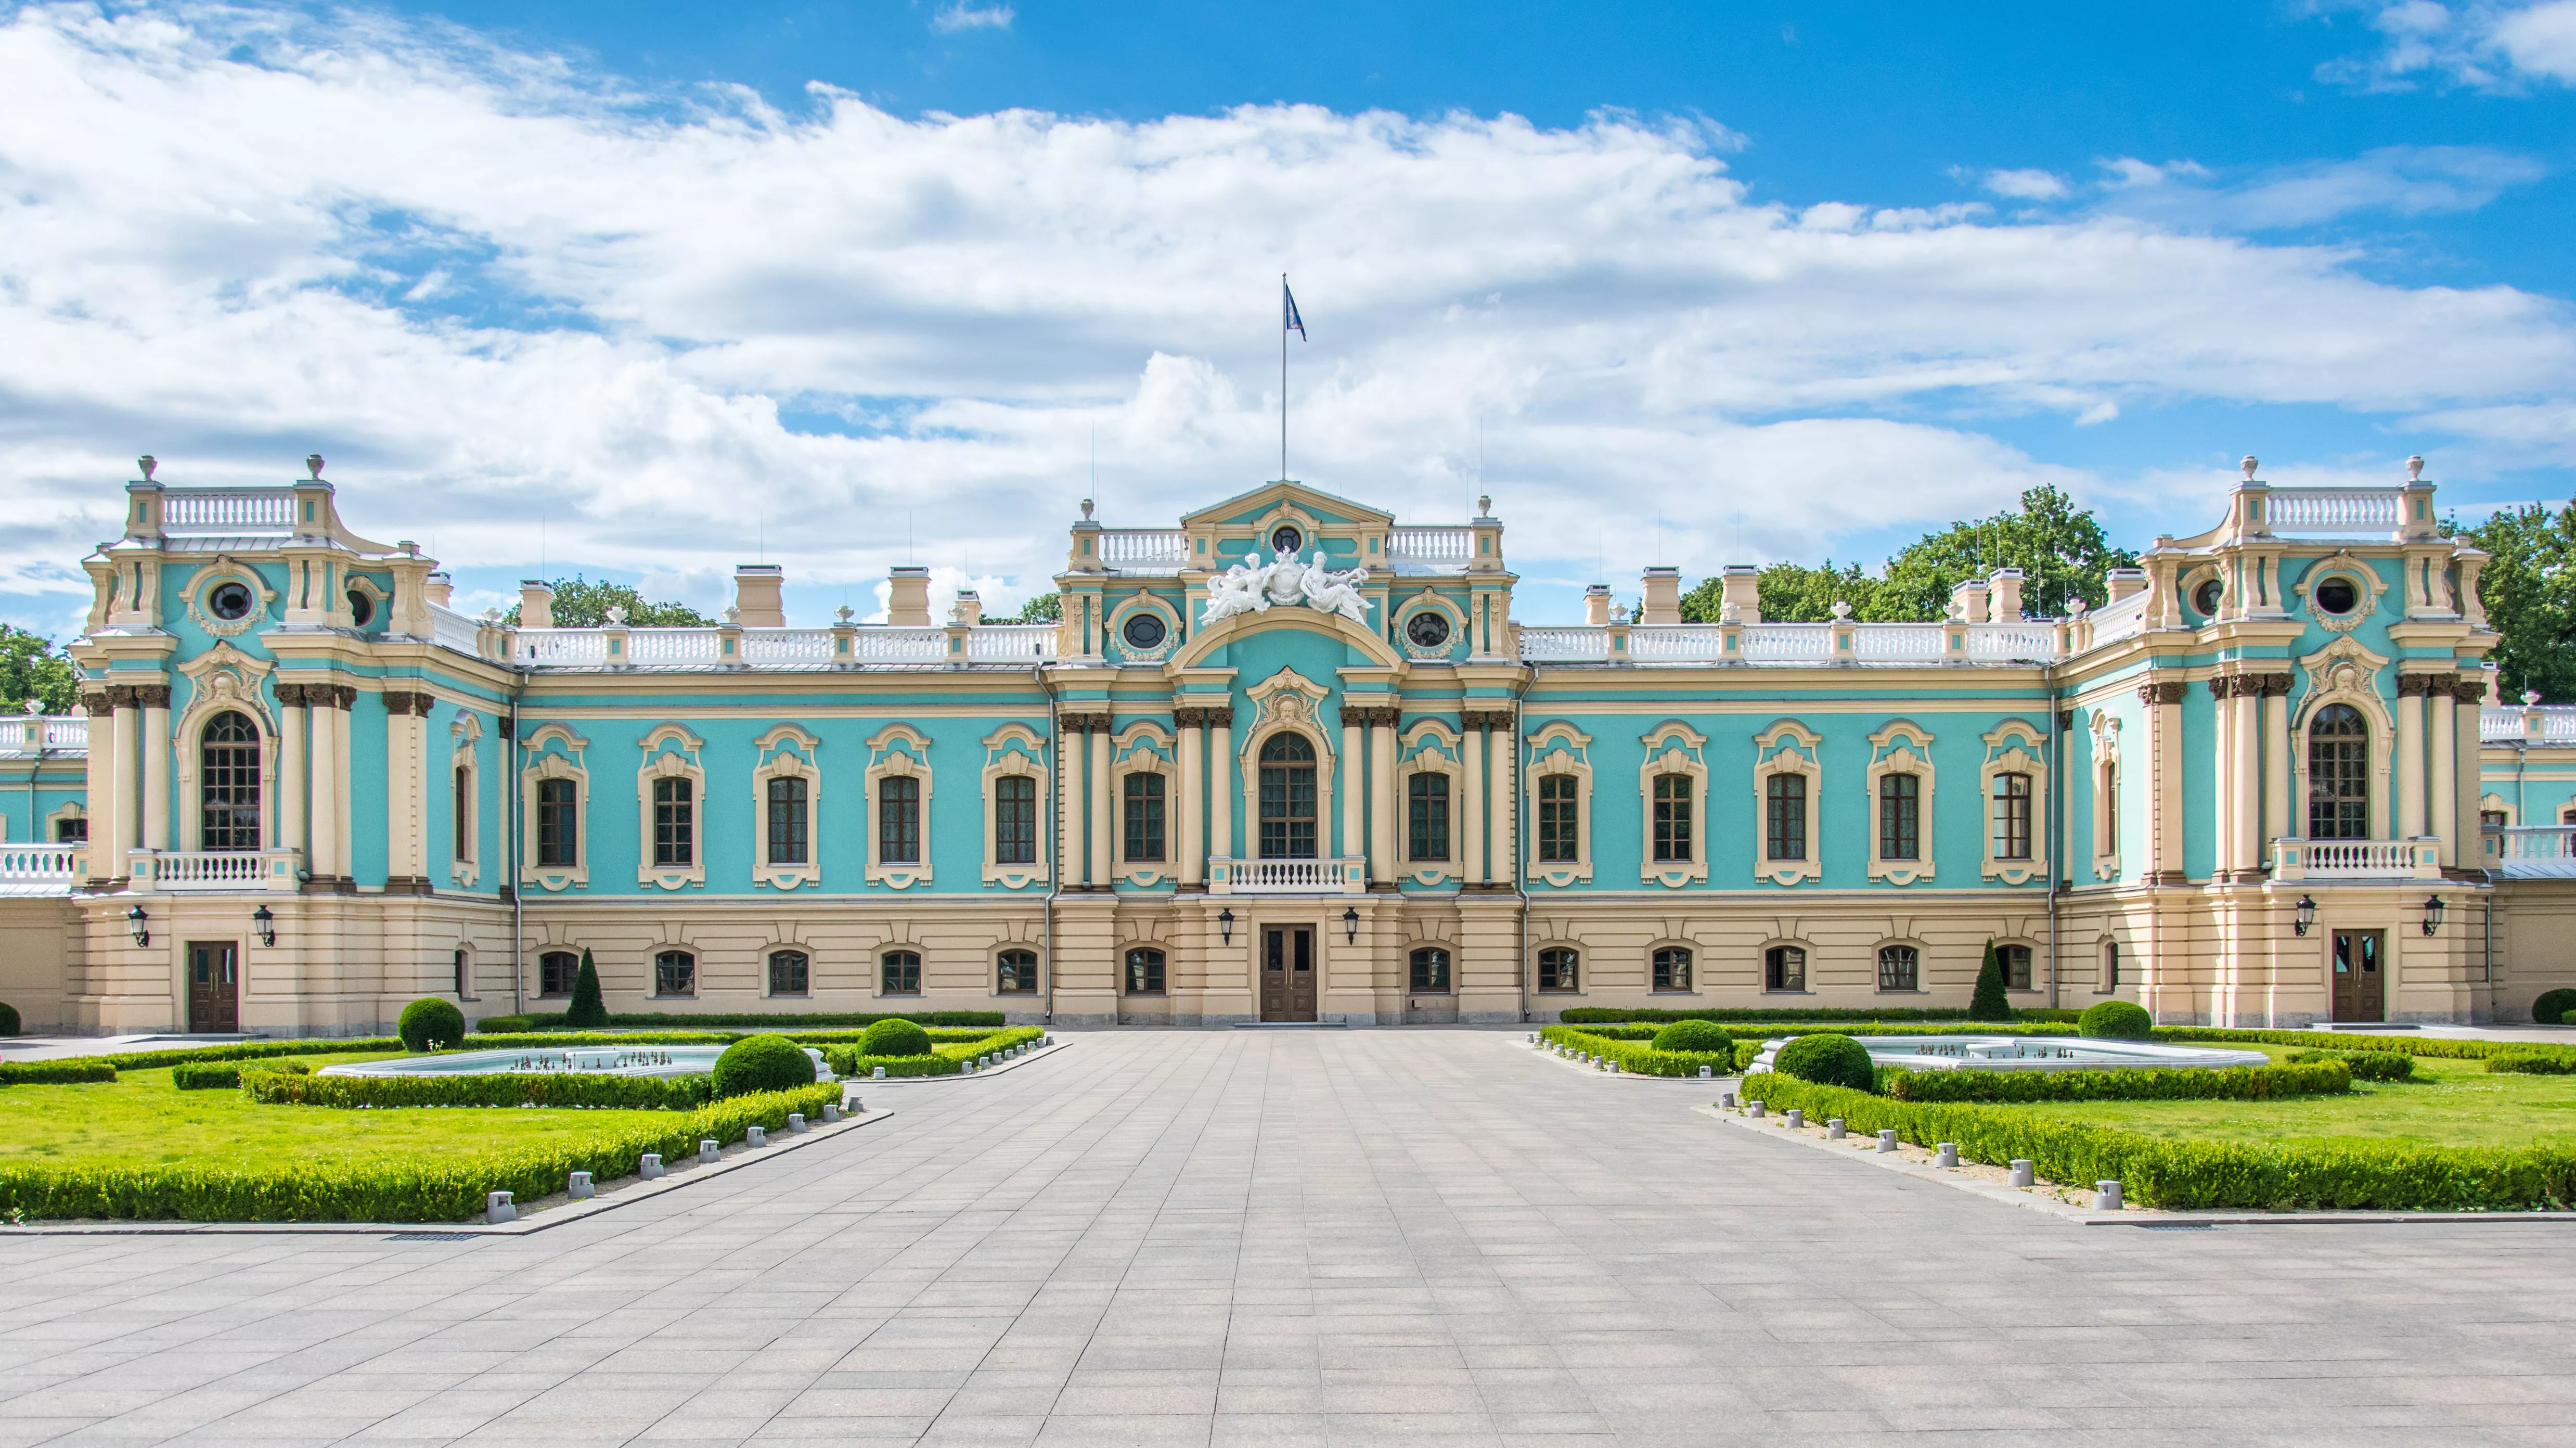 Mariinsky Palace in Ukraine, Europe | Architecture - Rated 3.8